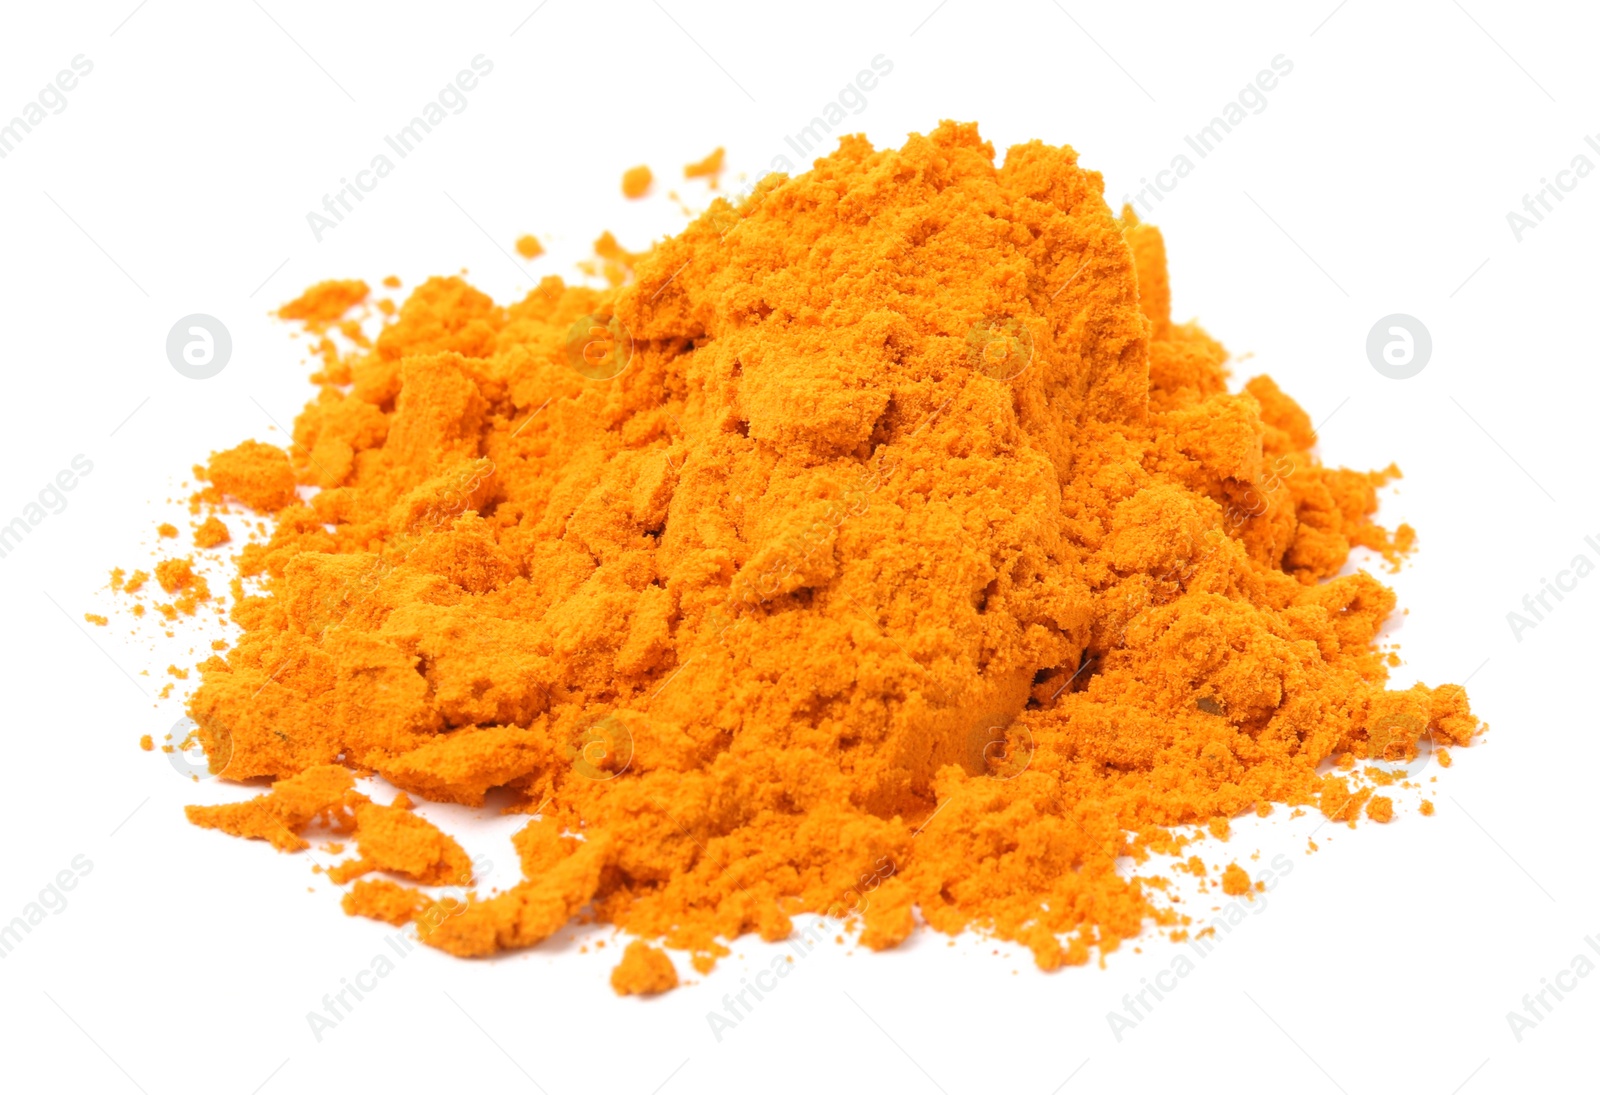 Photo of Heap of saffron powder on white background